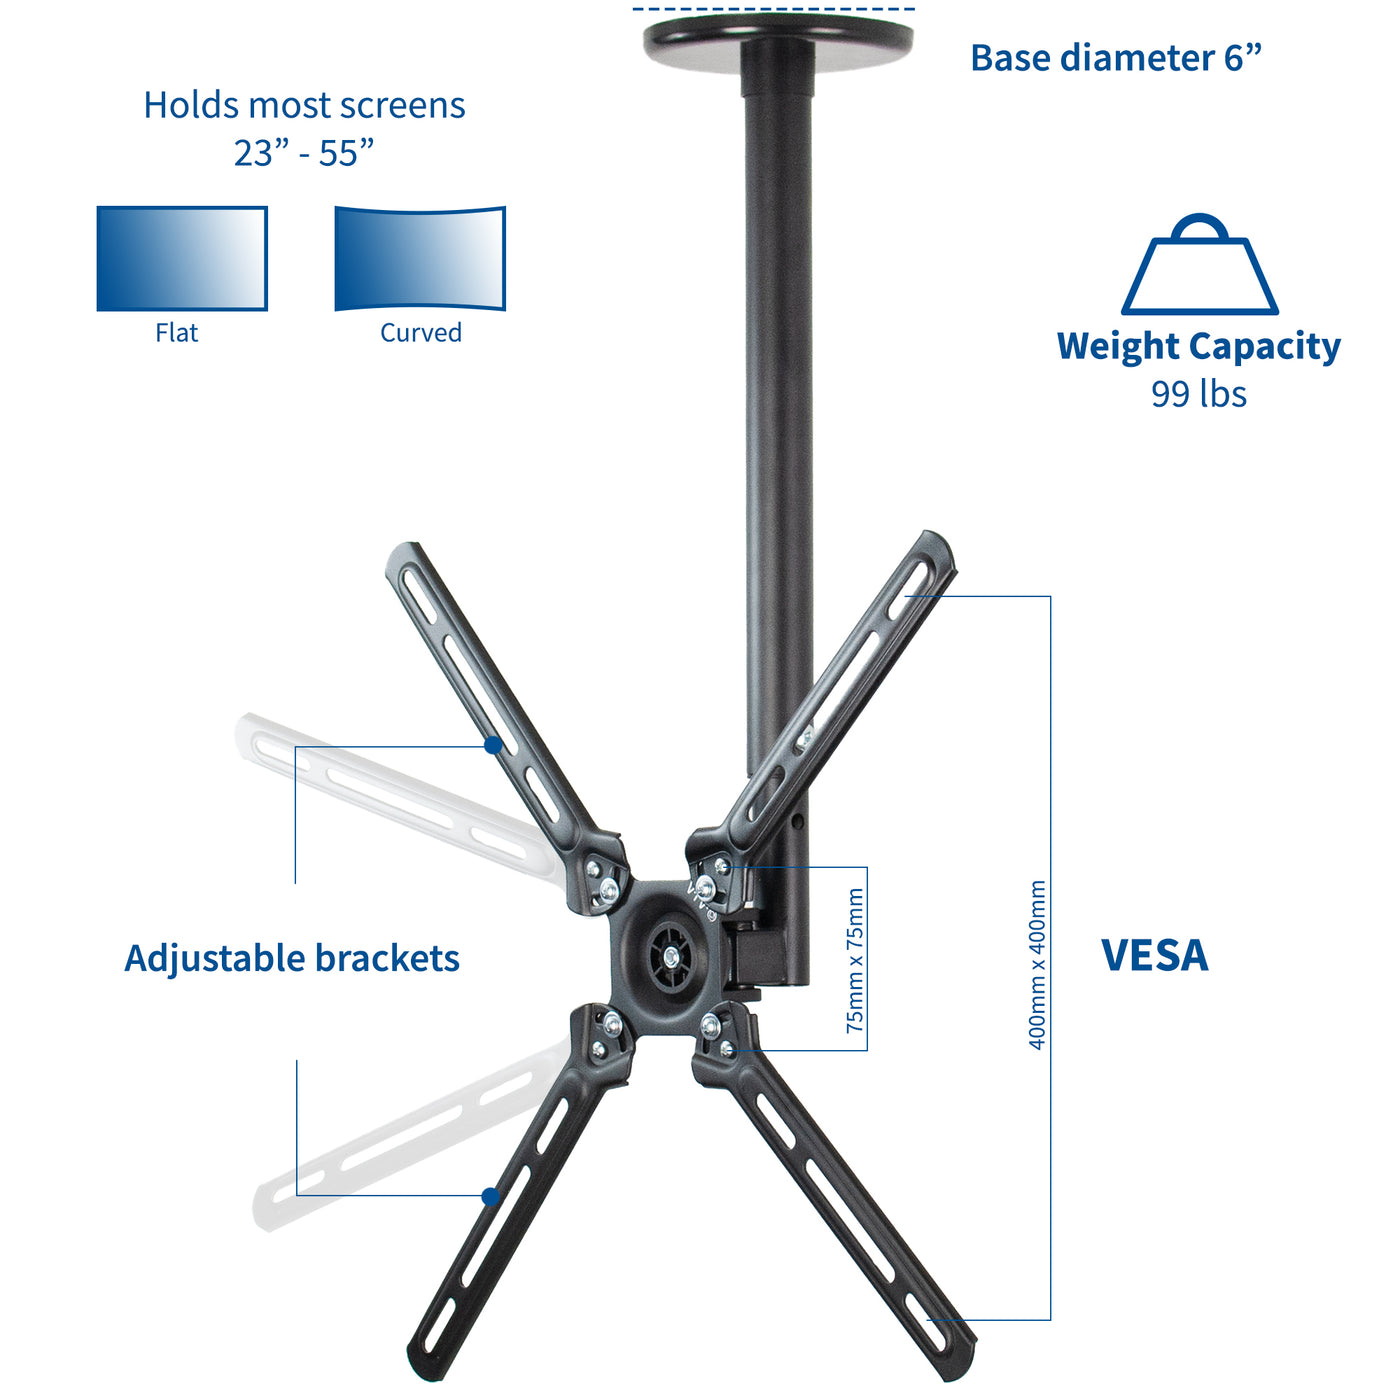 Heavy-duty height adjustable TV ceiling mount and soundbar bracket for enhanced audio speaker system with VESA design and adjustable brackets.